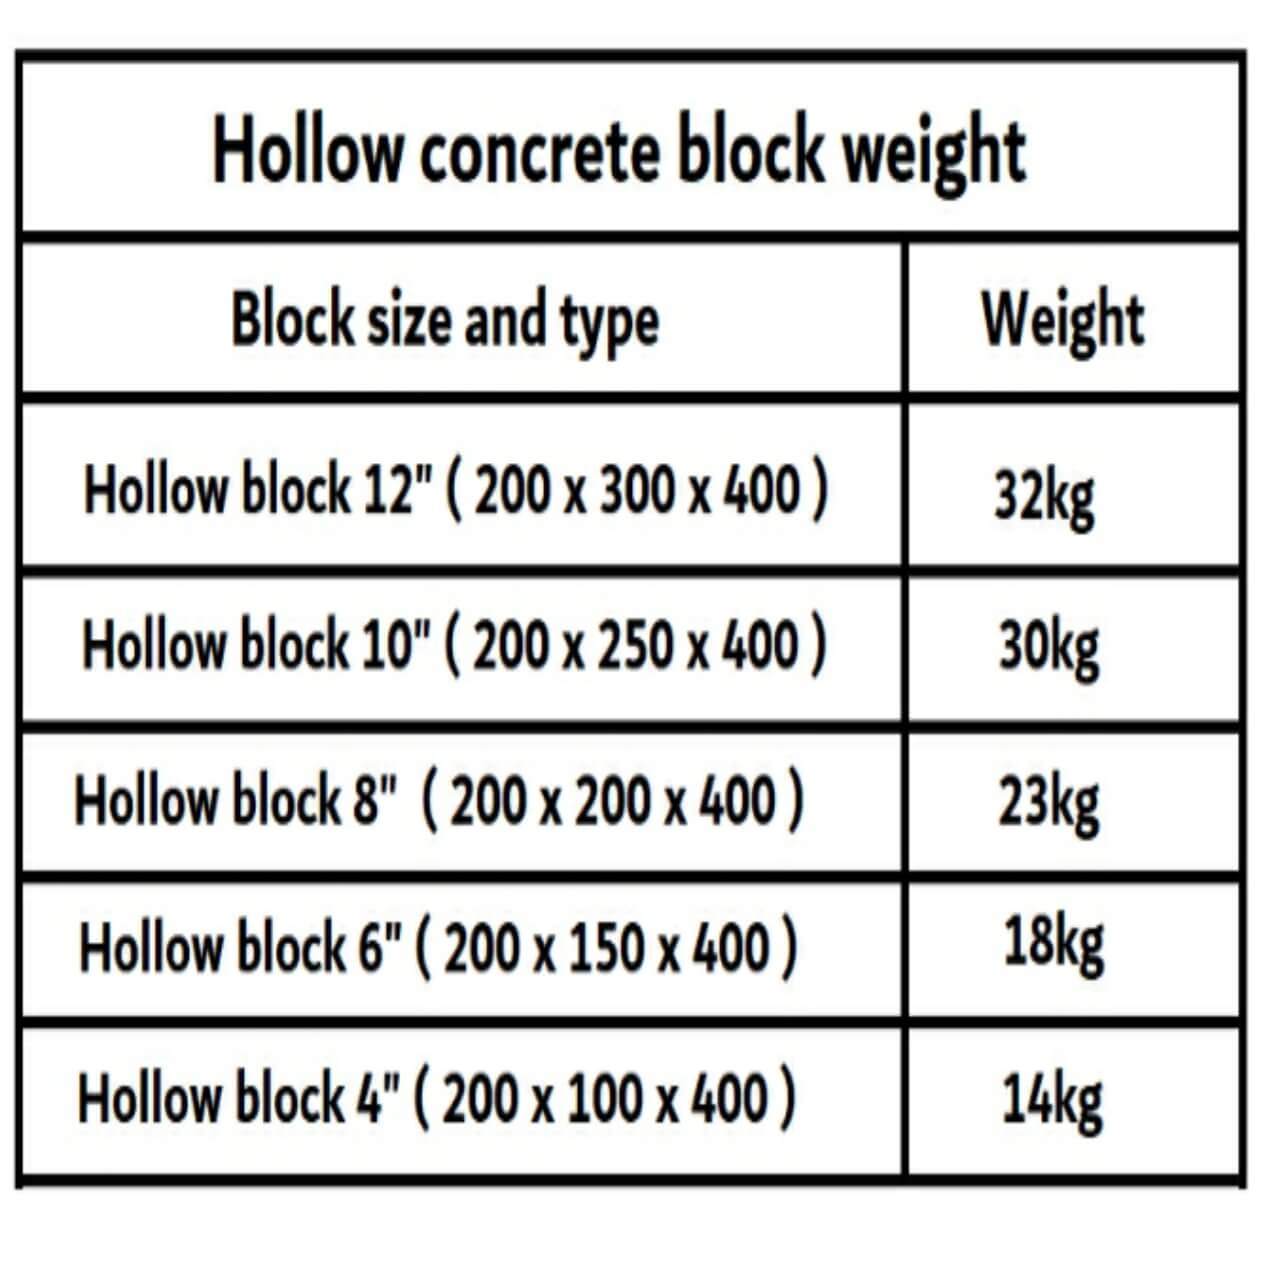 Hollow concrete block weight